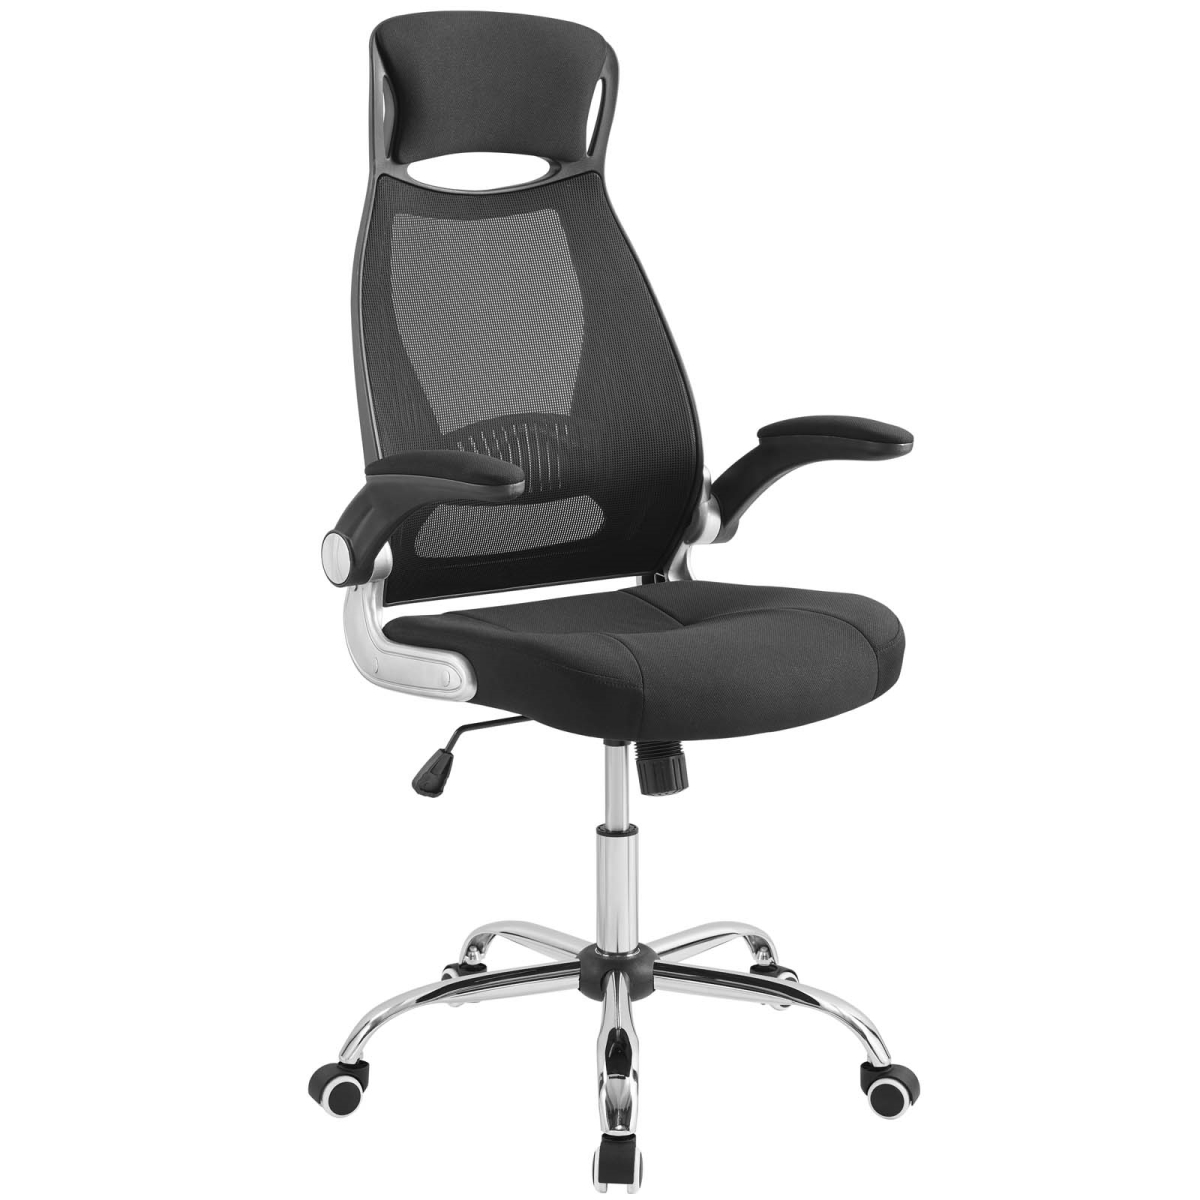 Eei-3039-blk Expedite Highback Office Chair - Black, 47 - 50.5 X 24.5 X 25.5 In.